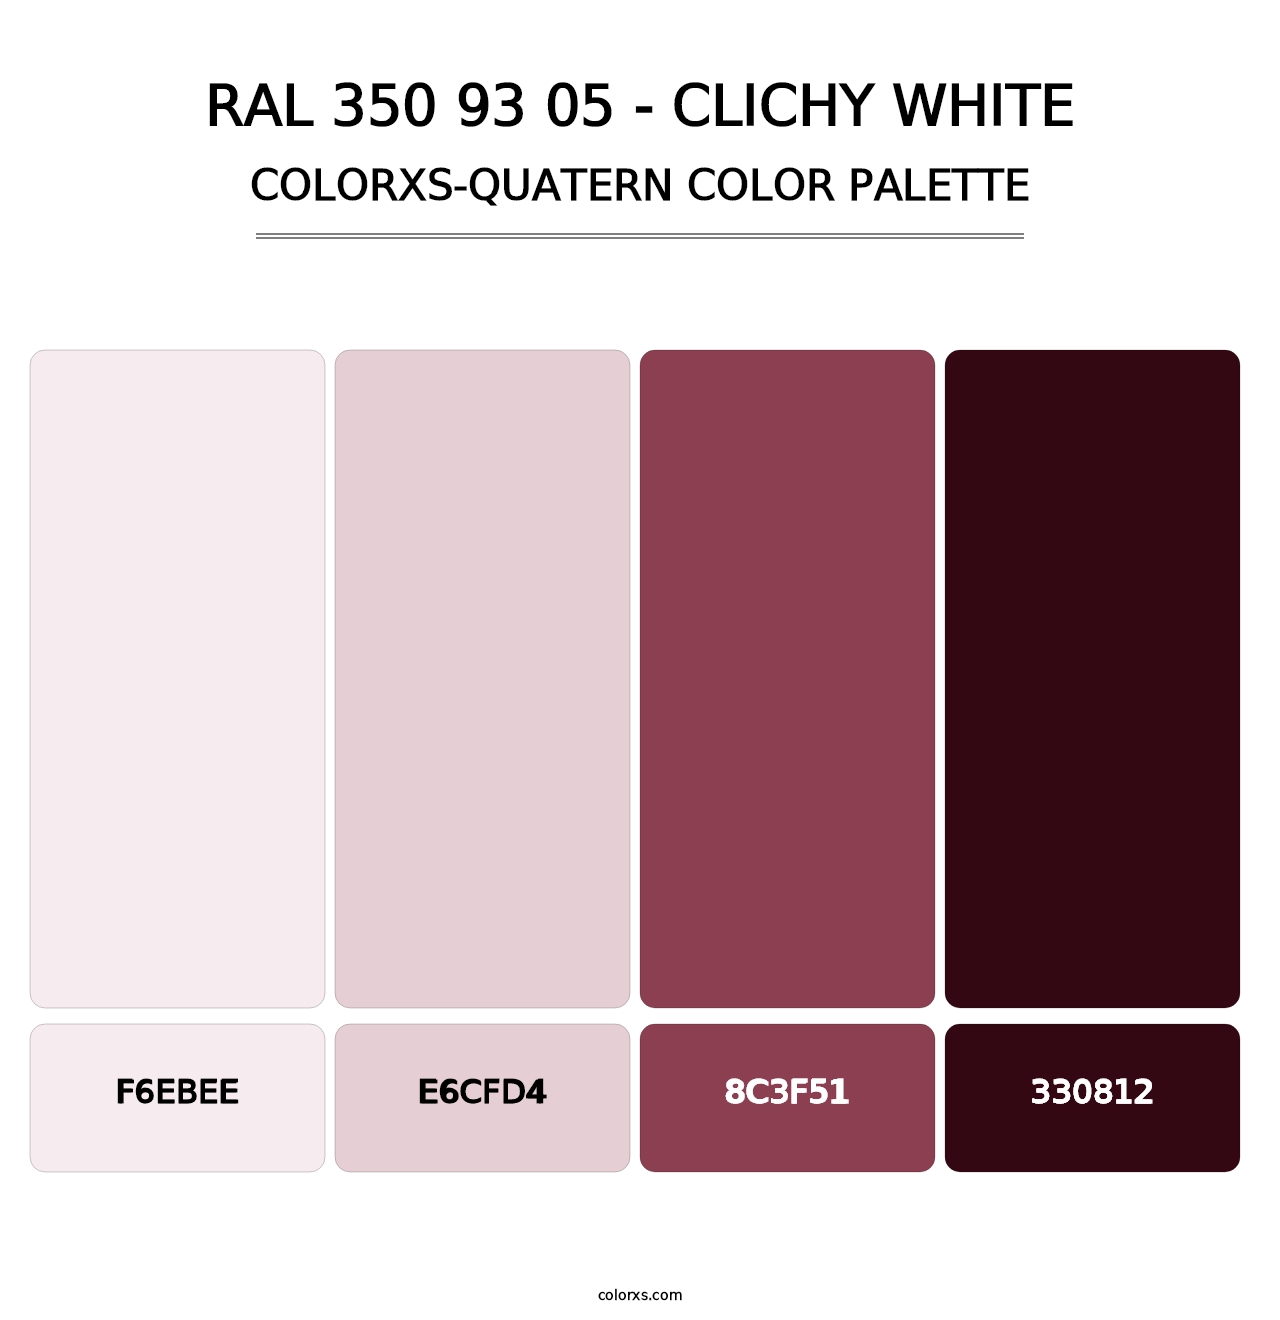 RAL 350 93 05 - Clichy White - Colorxs Quatern Palette